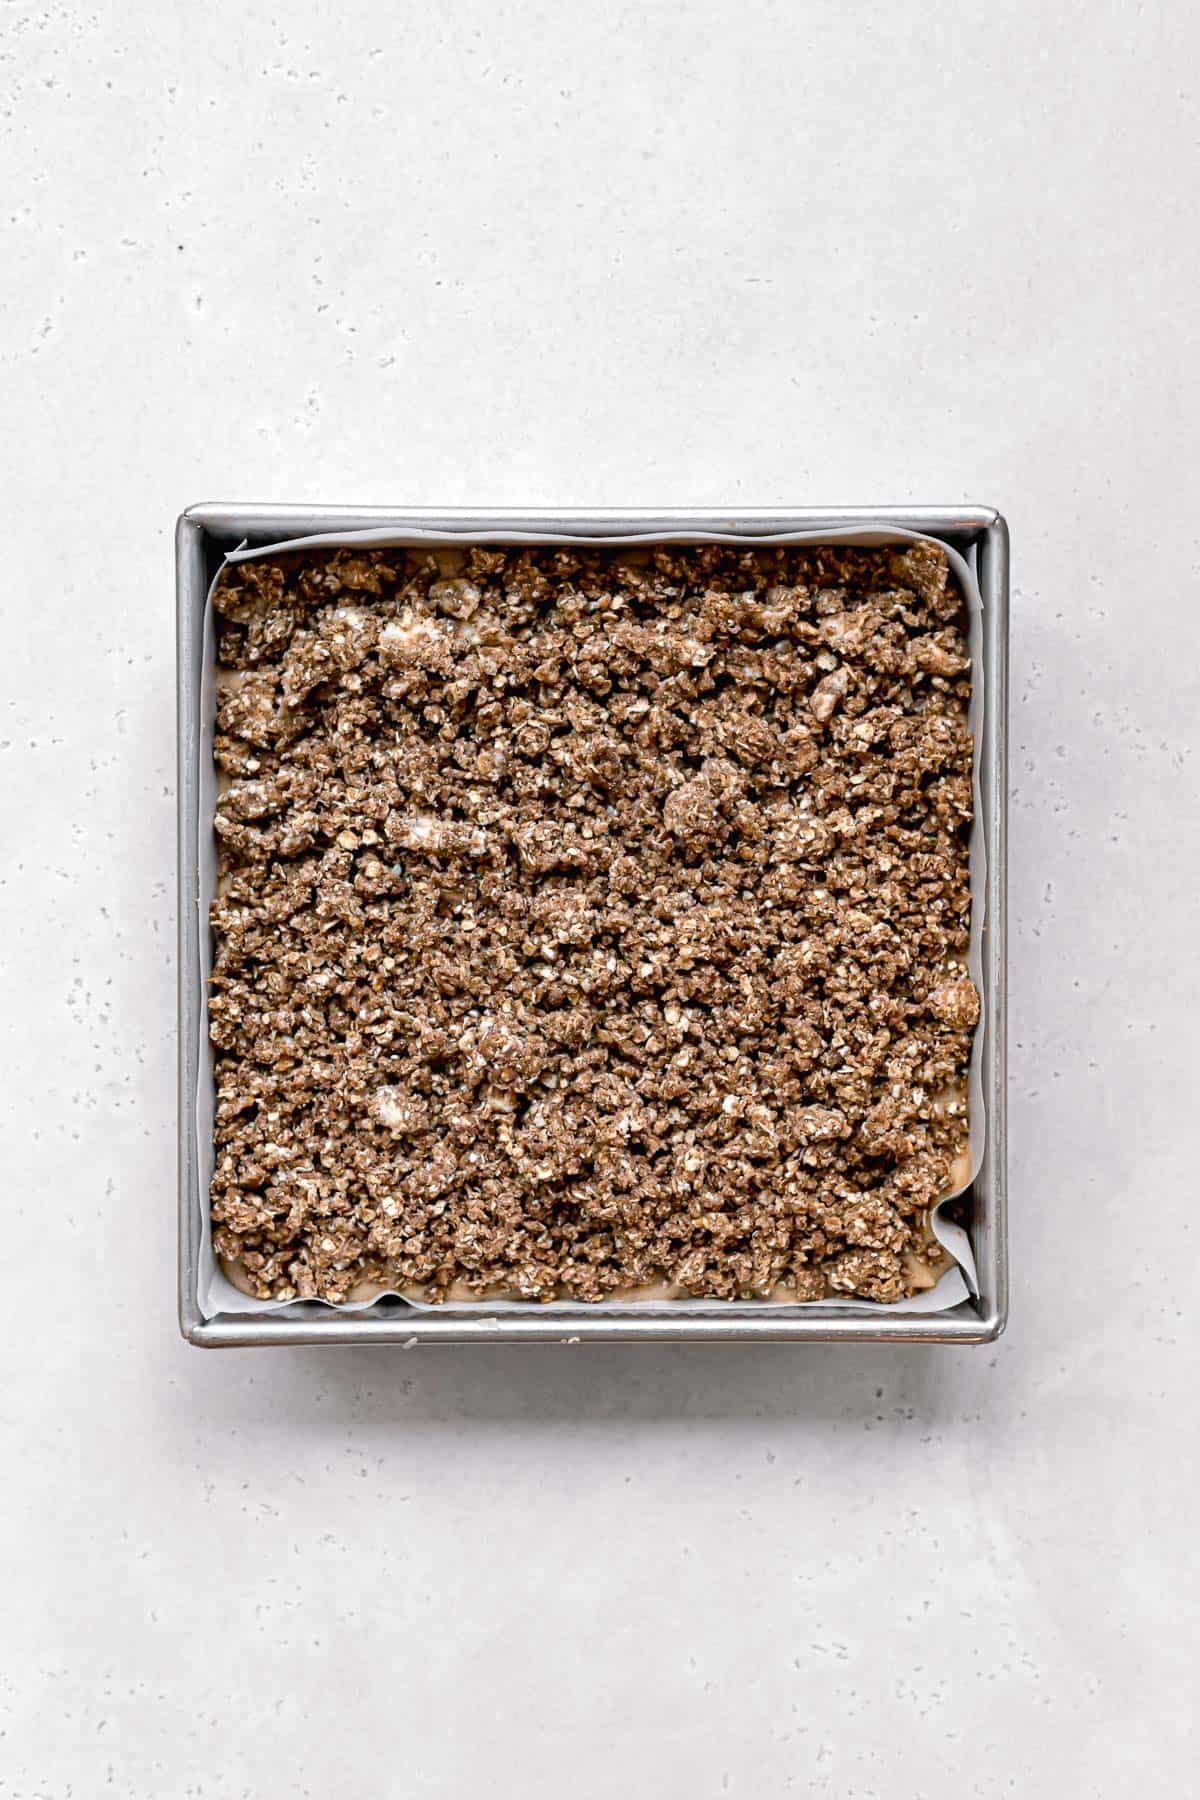 brown sugar oat streusel added on top of batter in square pan.